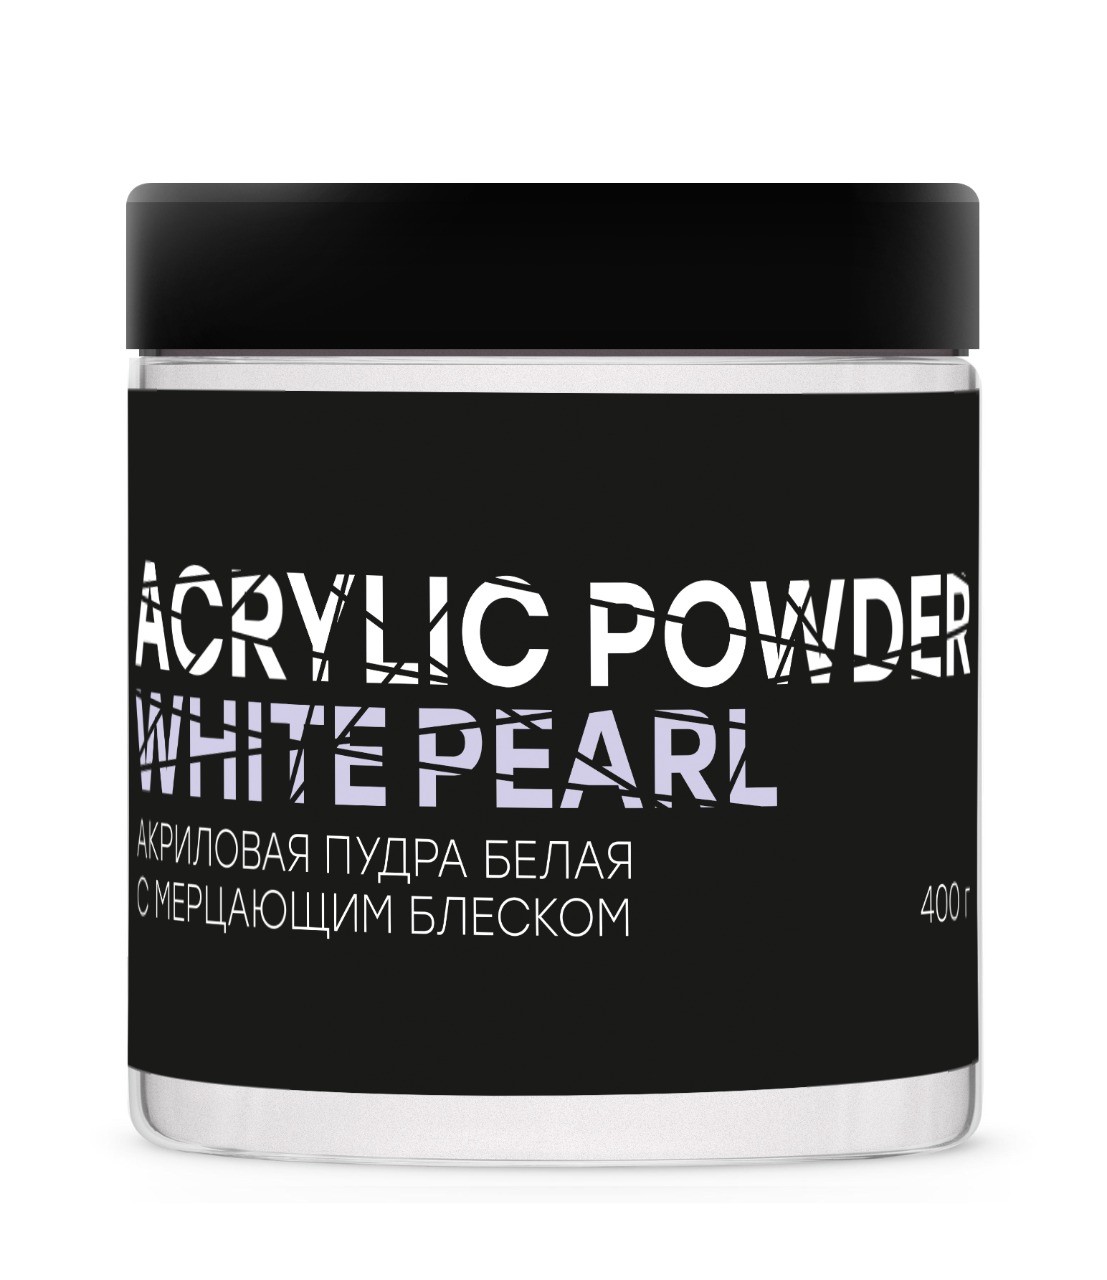 Акриловая пудра InGarden Acrylic Powder Classic White белая, 400 г ezflow акриловая ярко белая пудра truly white acrylic powder 21г